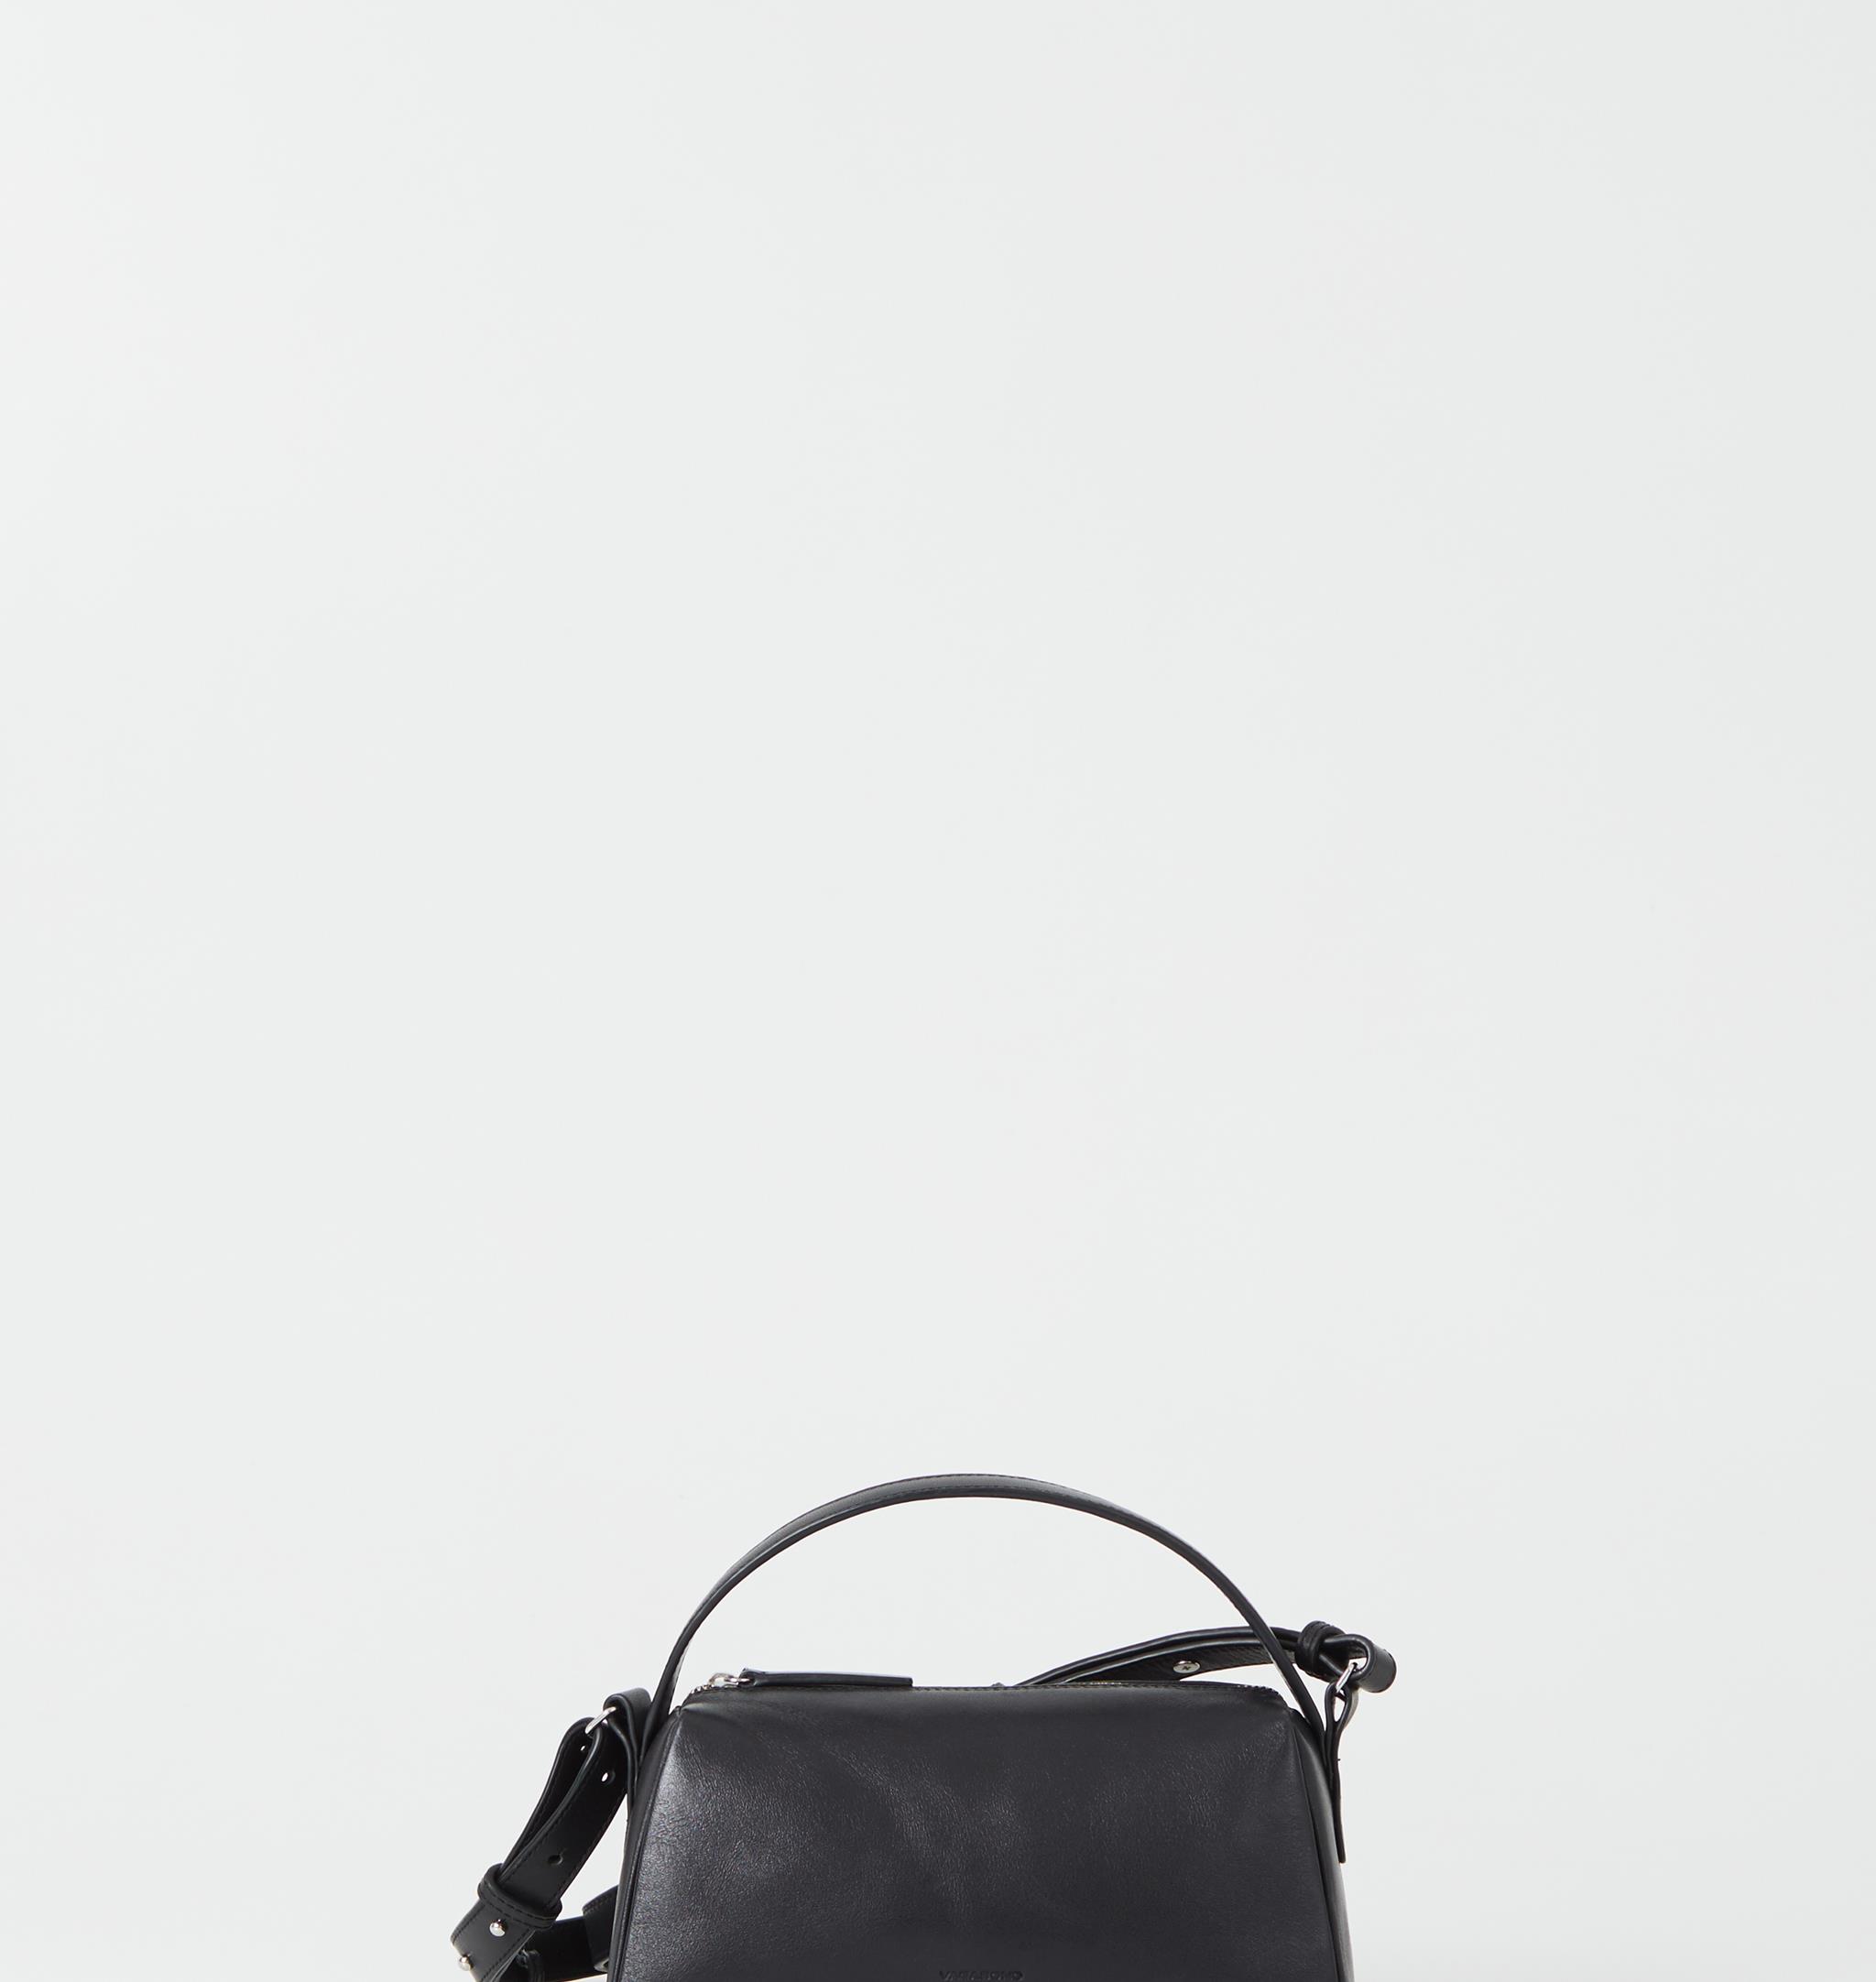 Florina Black Bag Woman | Vagabond